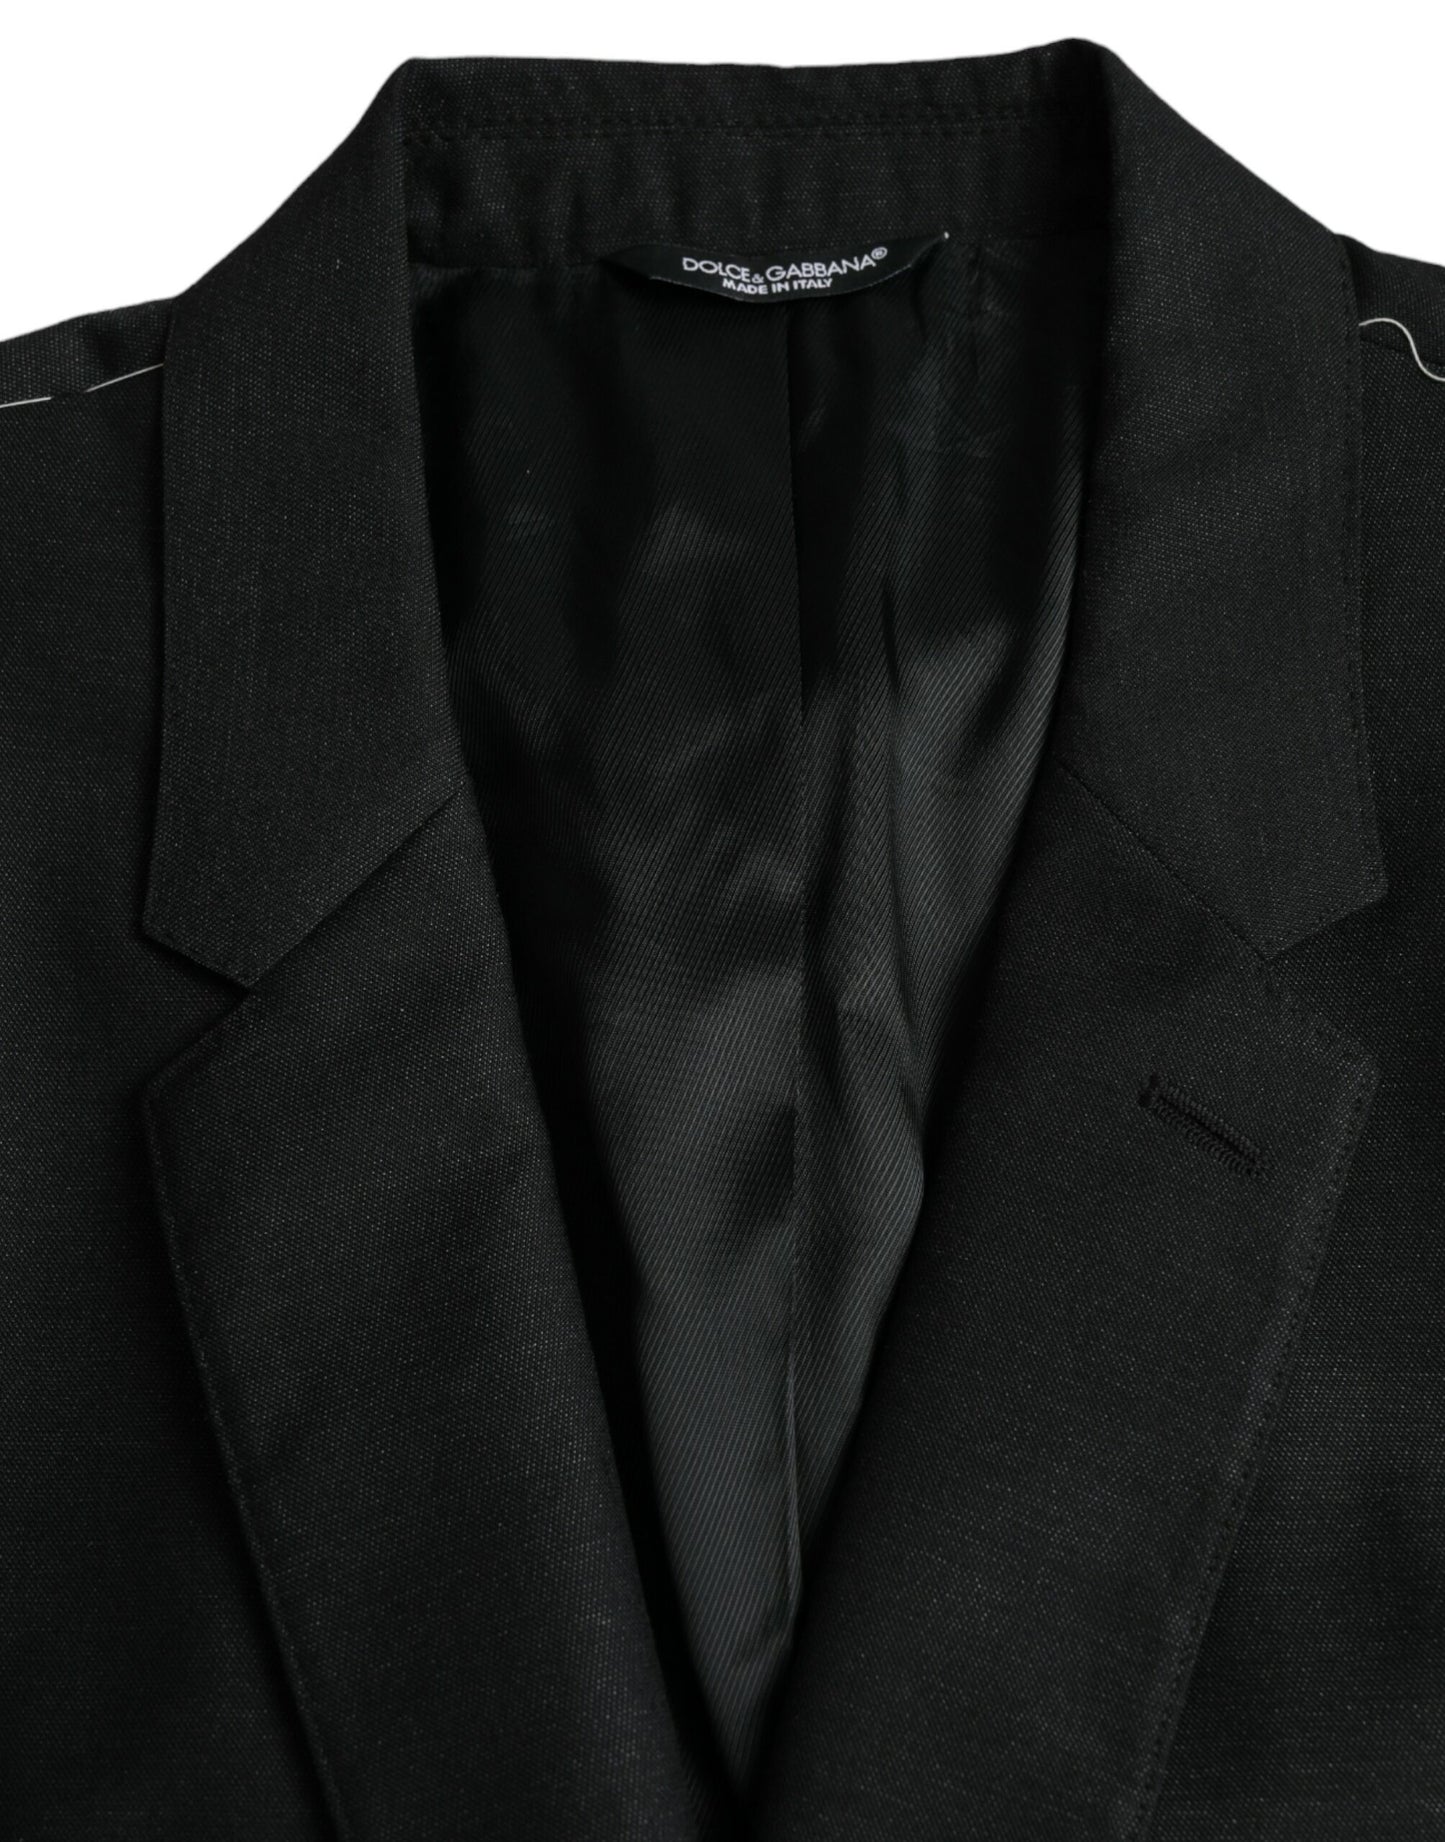 Black Wool Notch SingleBreasted Coat Blazer